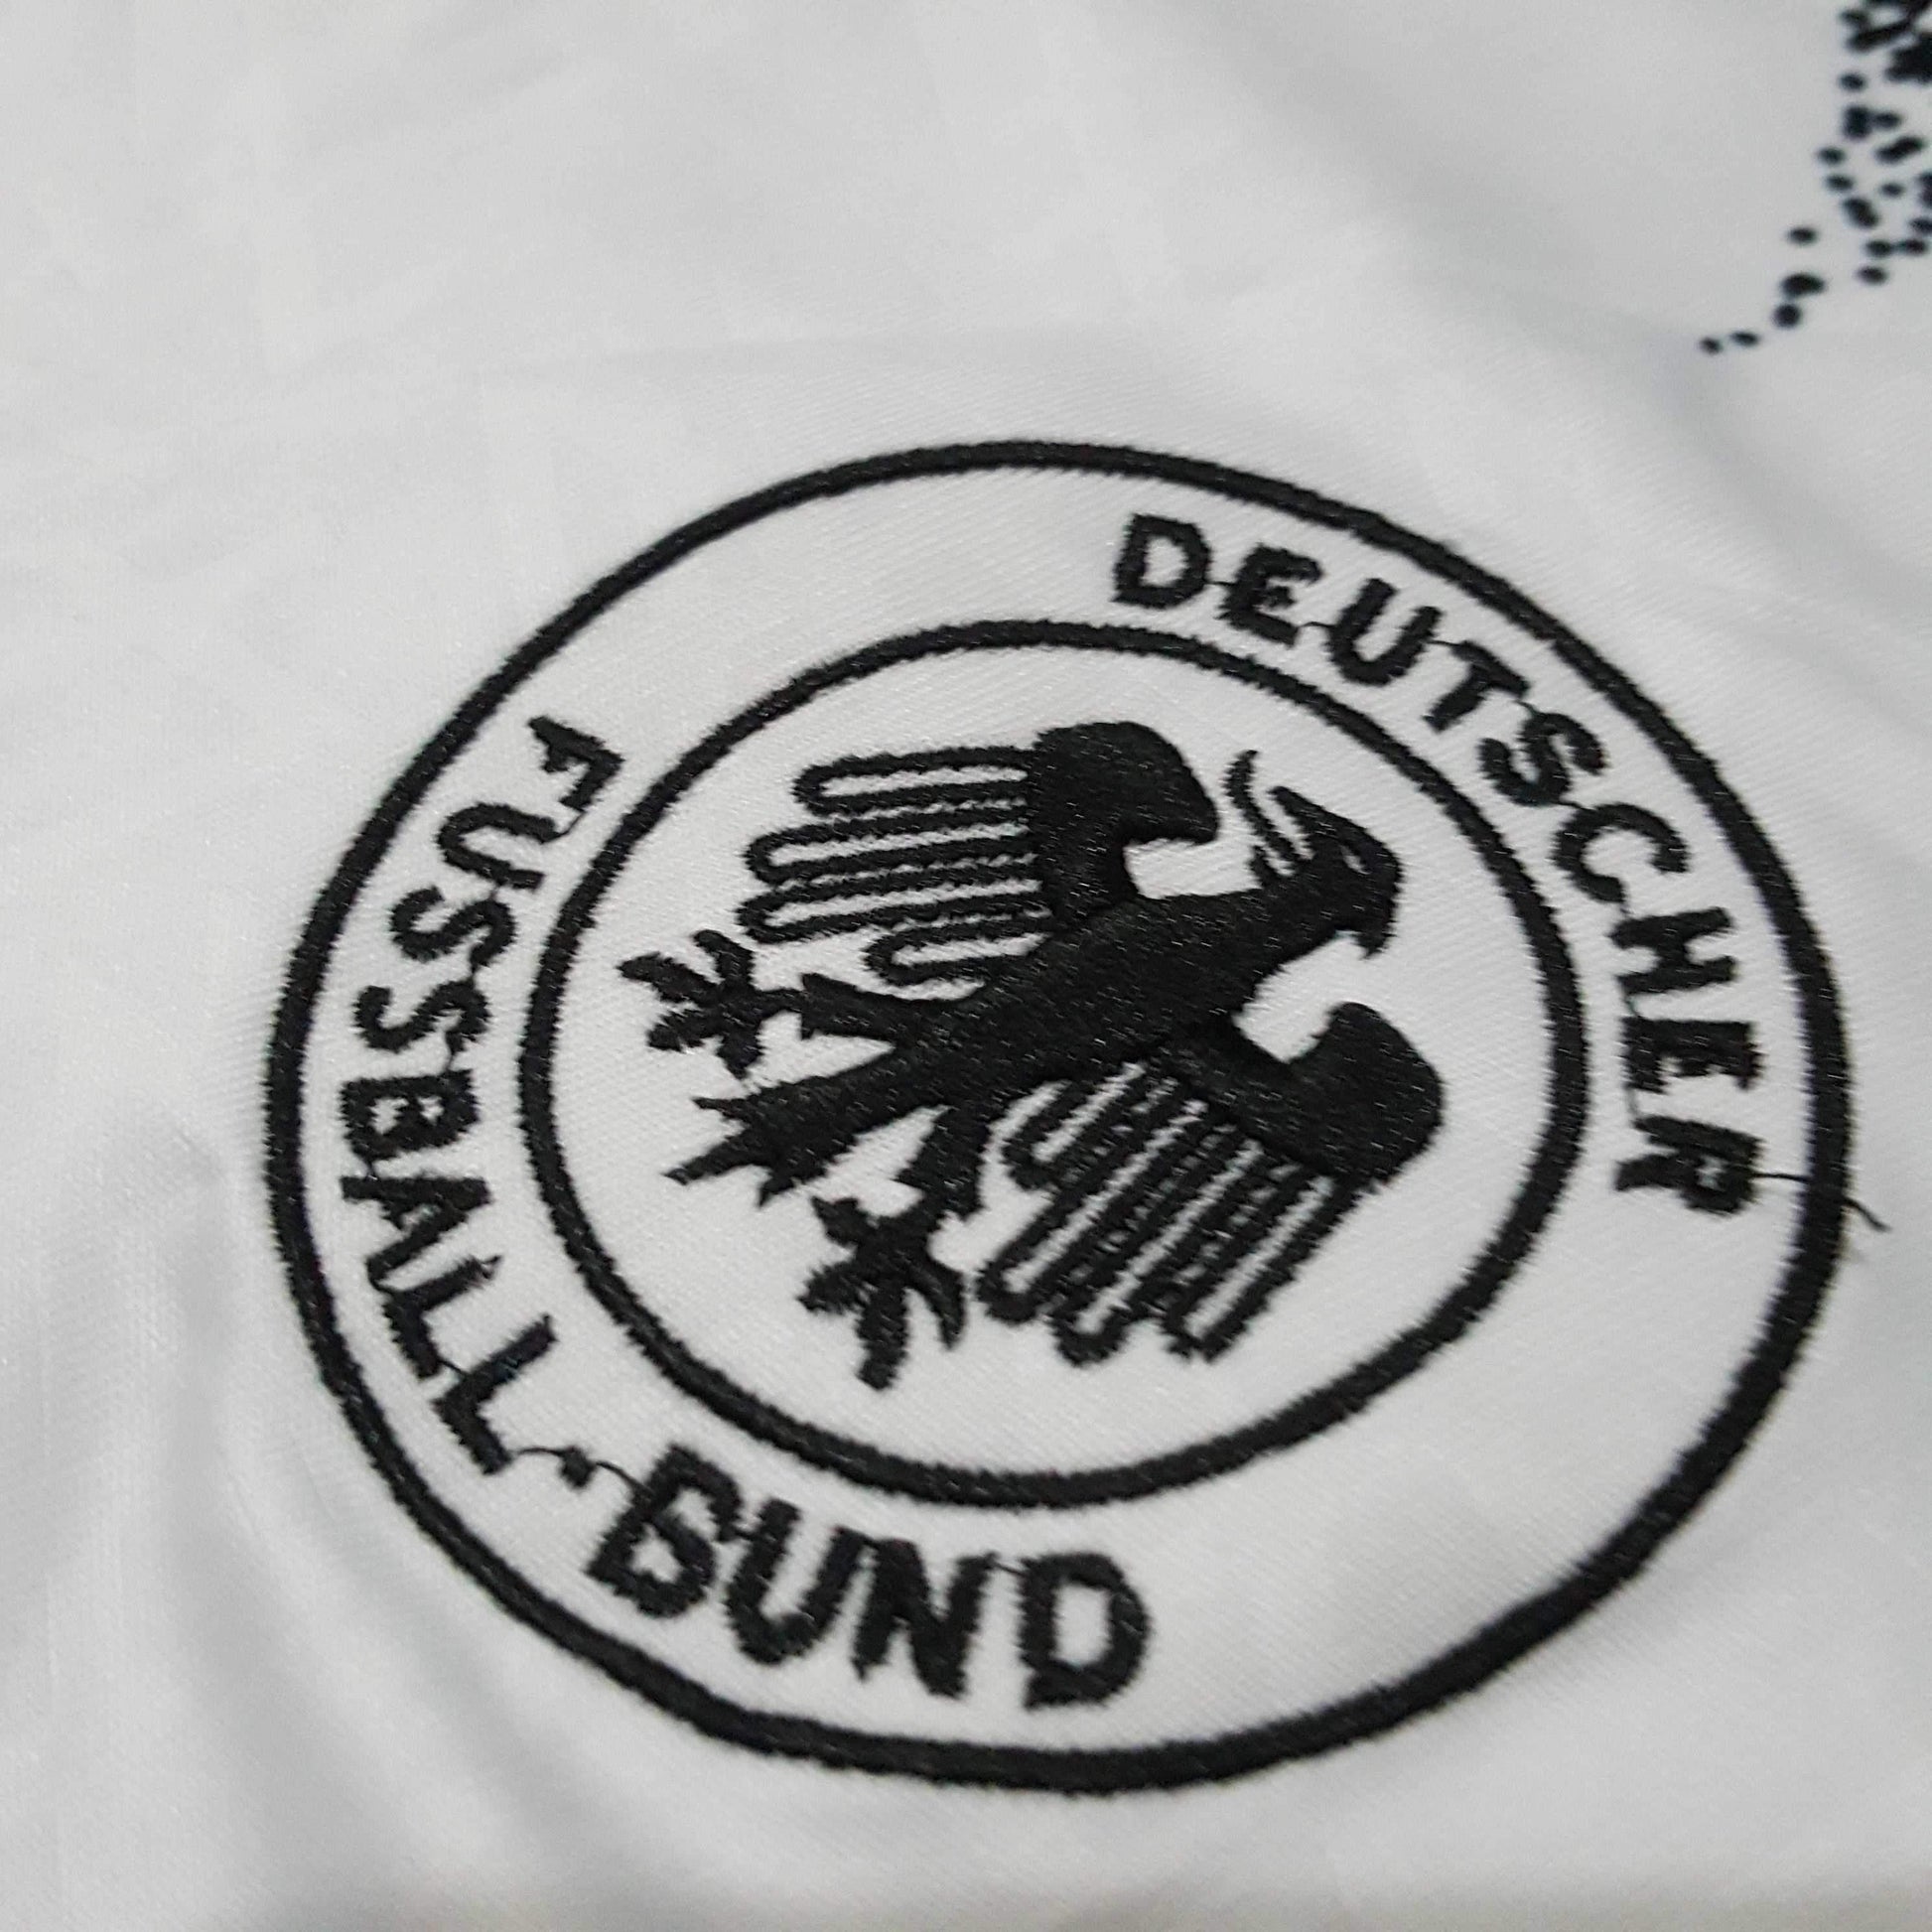 1994 Germany Home Shirt - ClassicFootballJersey